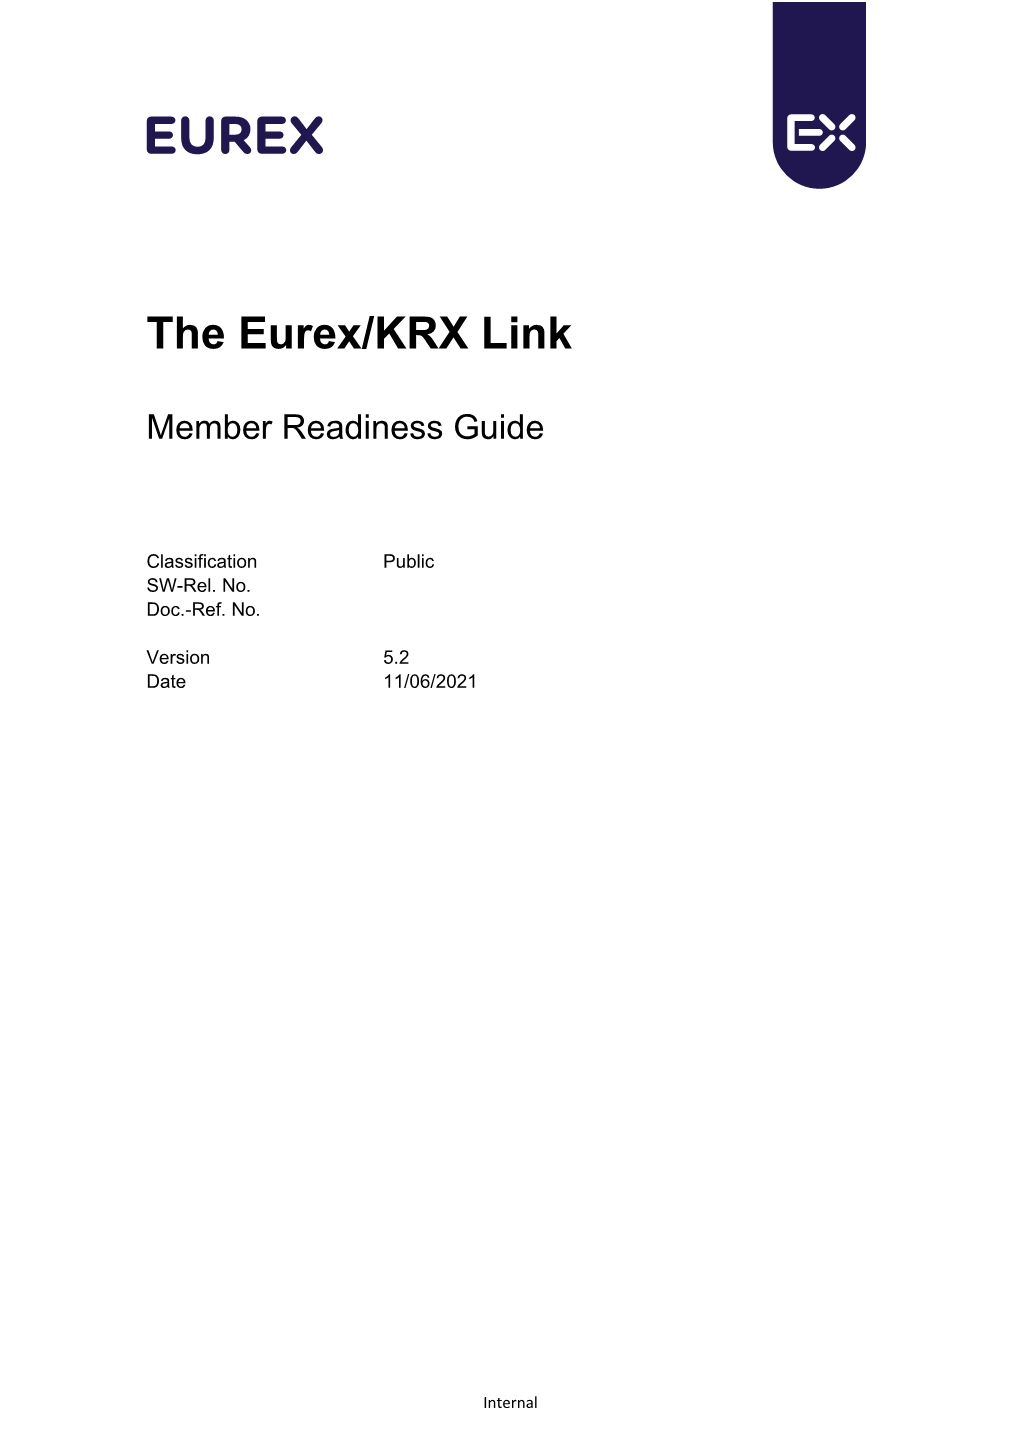 Eurex/KRX Link Member Readiness Guide